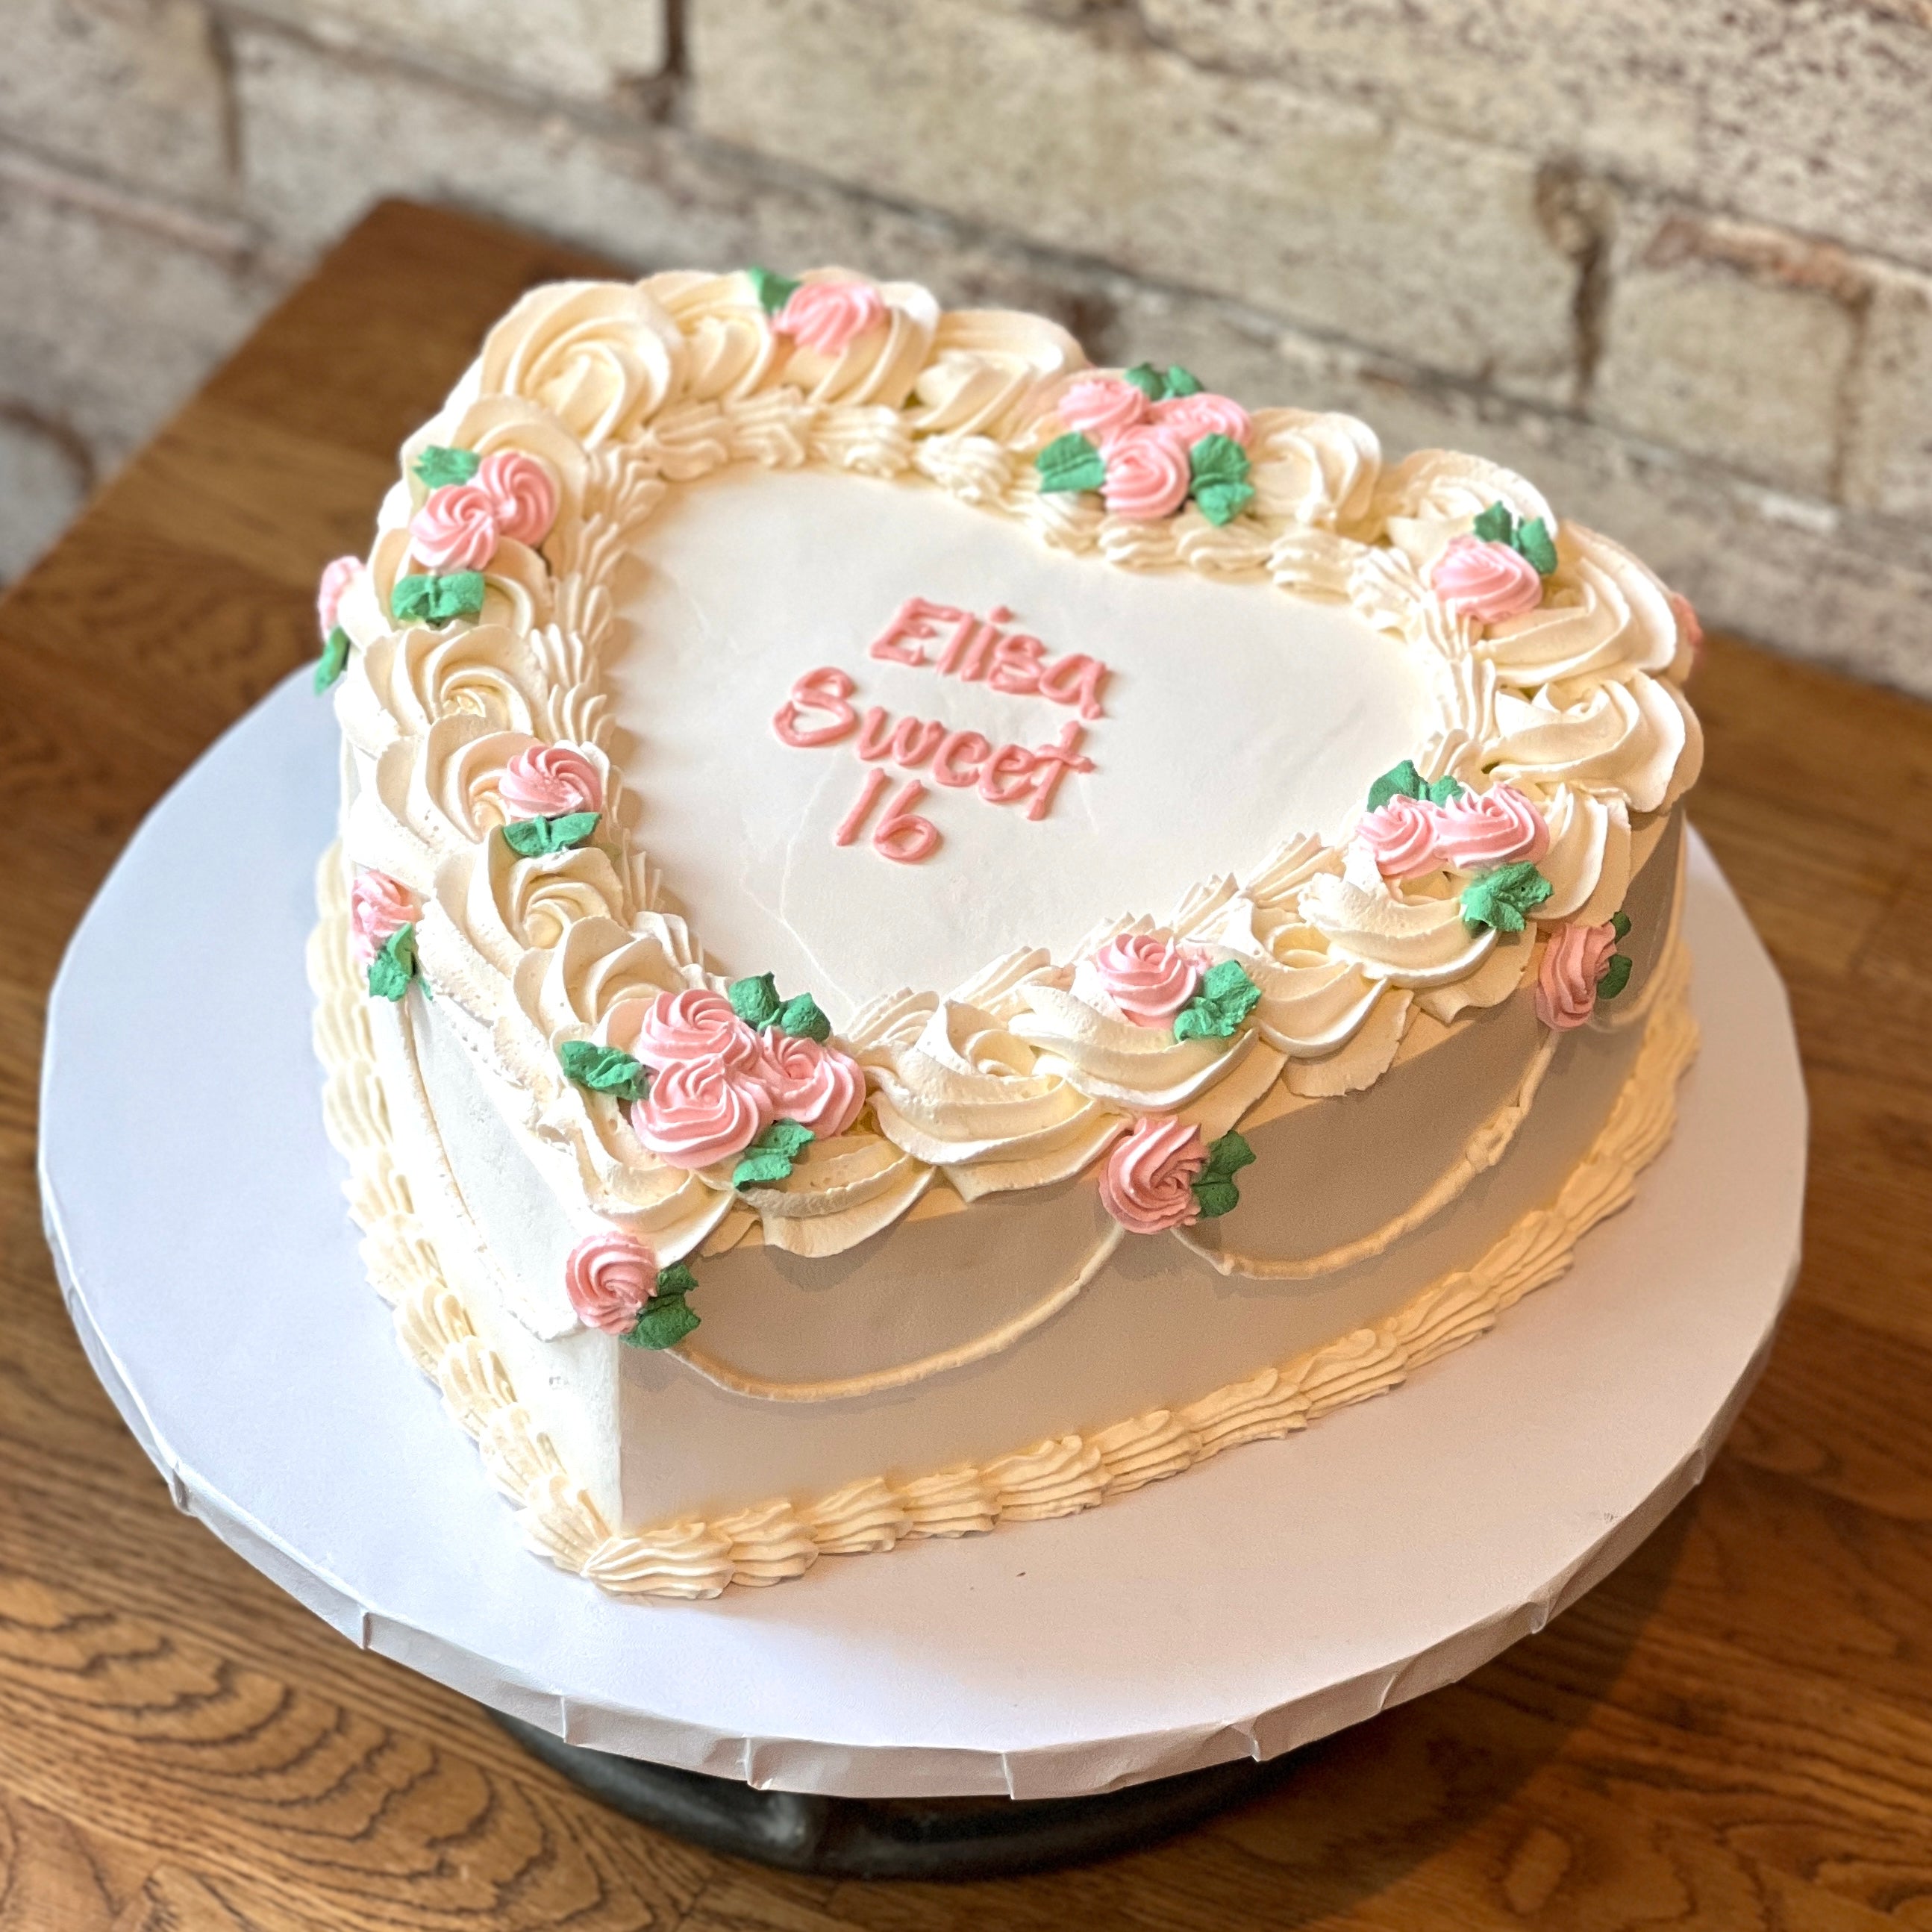 Number 16 cake | 16 birthday cake, Sweet 16 cakes, Beach themed cakes